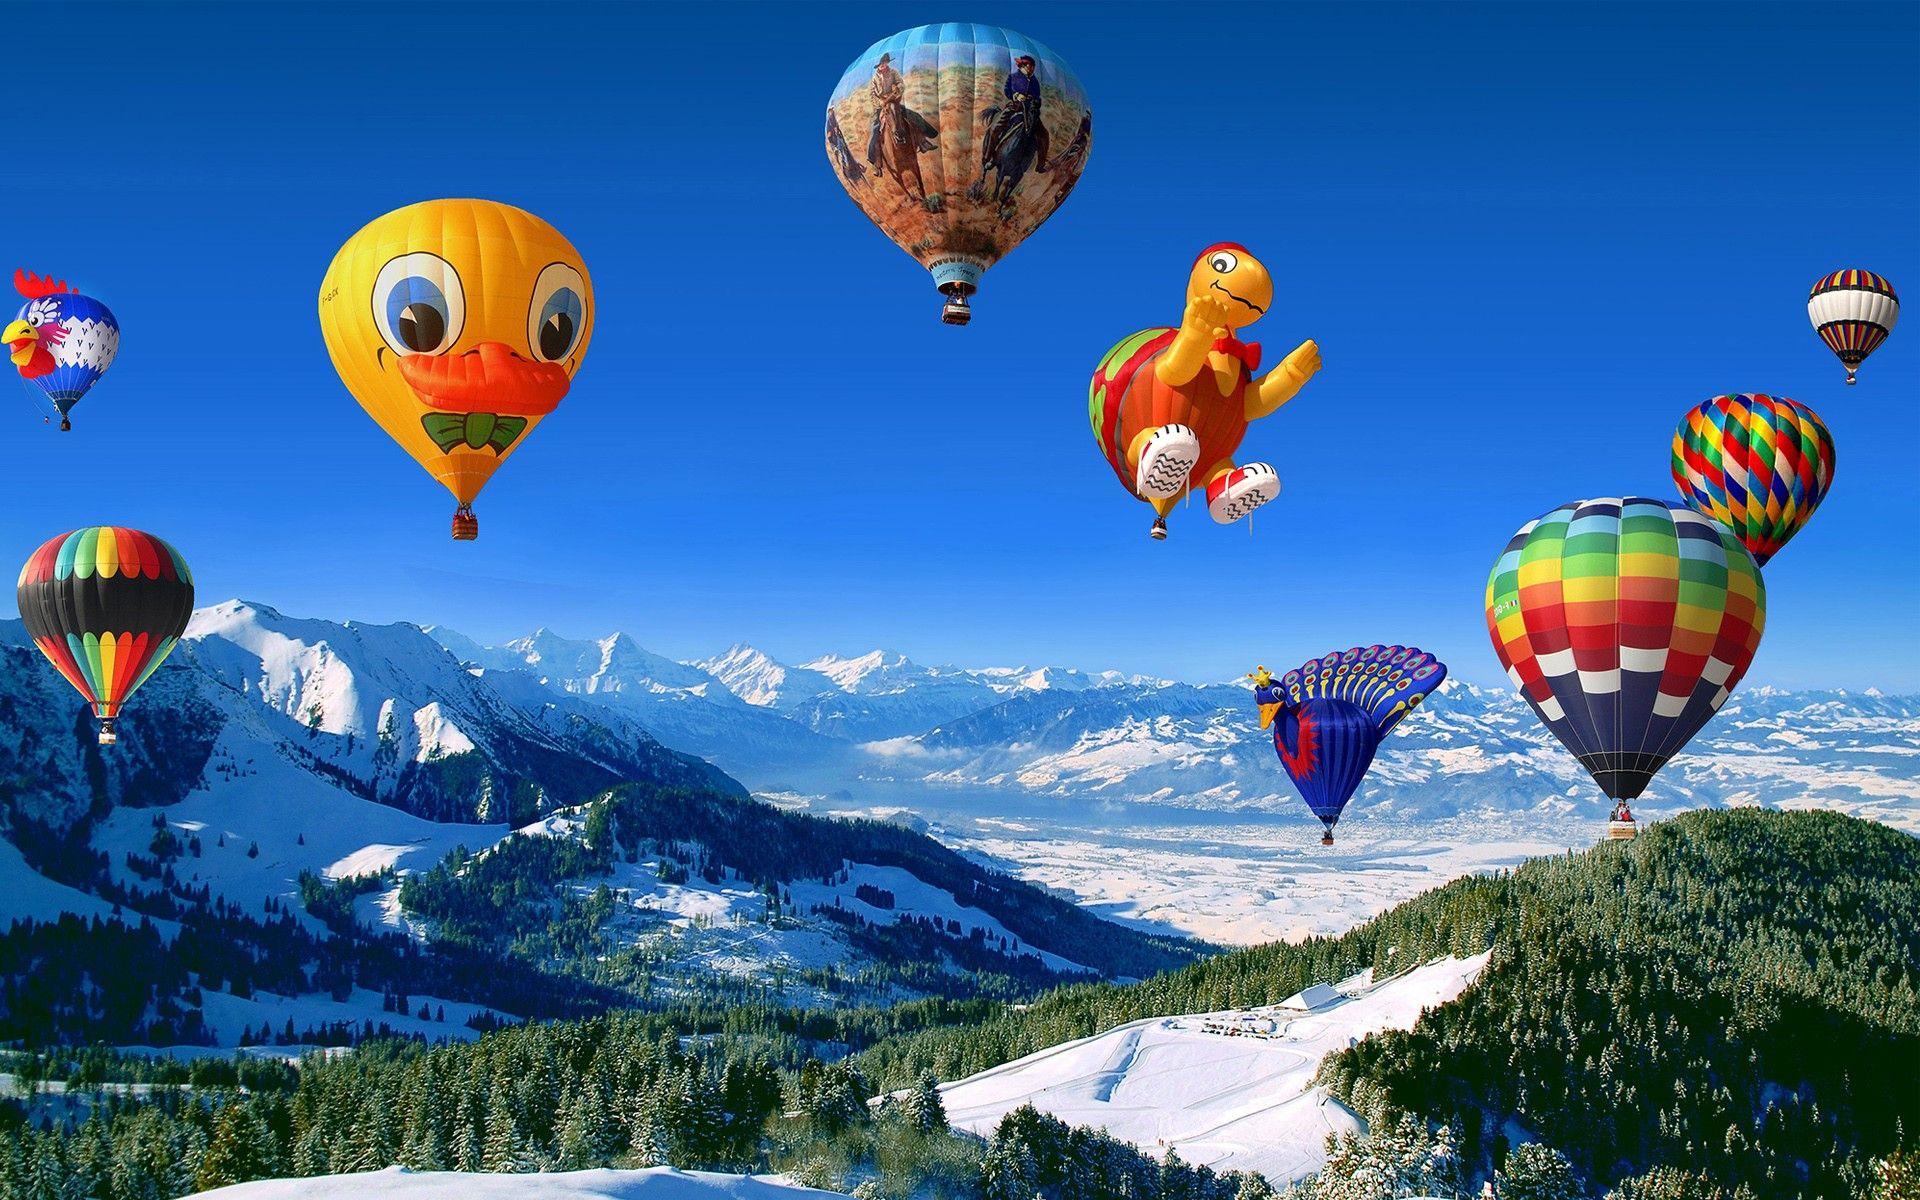 Hot Air Balloon, HD Nature, 4k Wallpaper, Image, Background